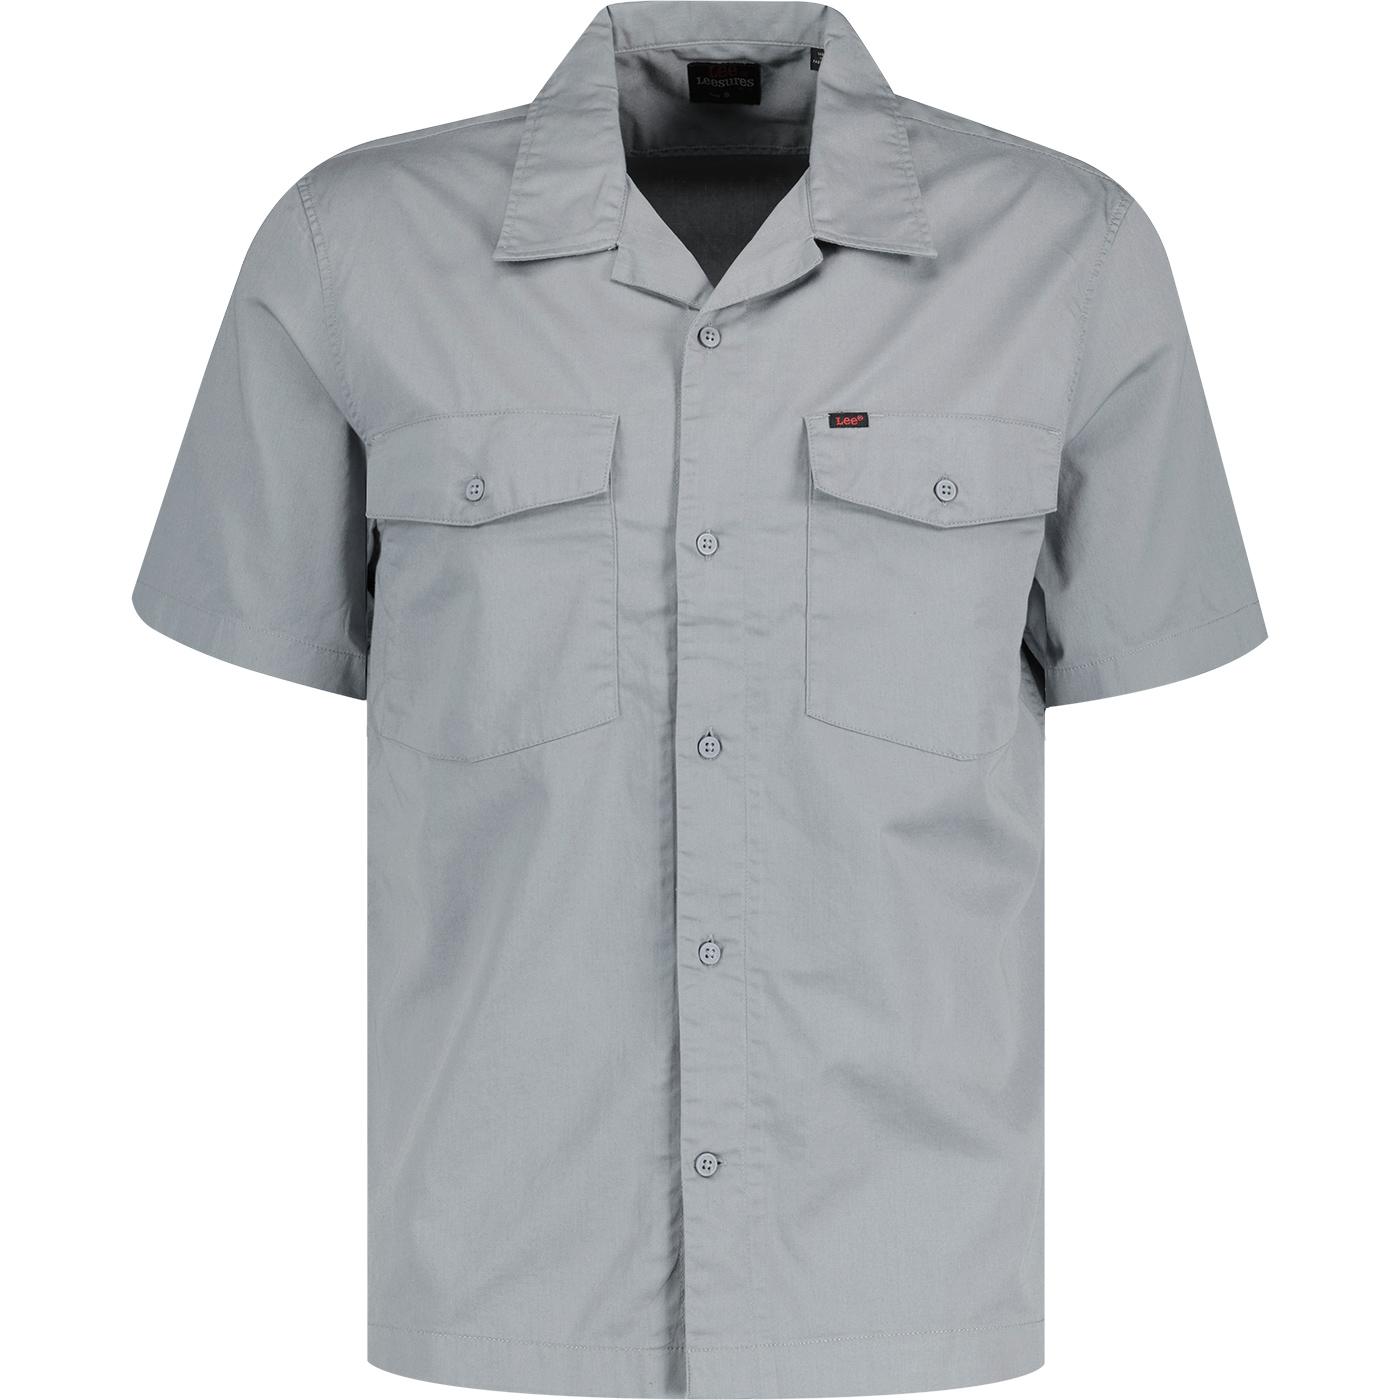 Chetopa Lee Retro Cotton Twill Shirt (New Gray)